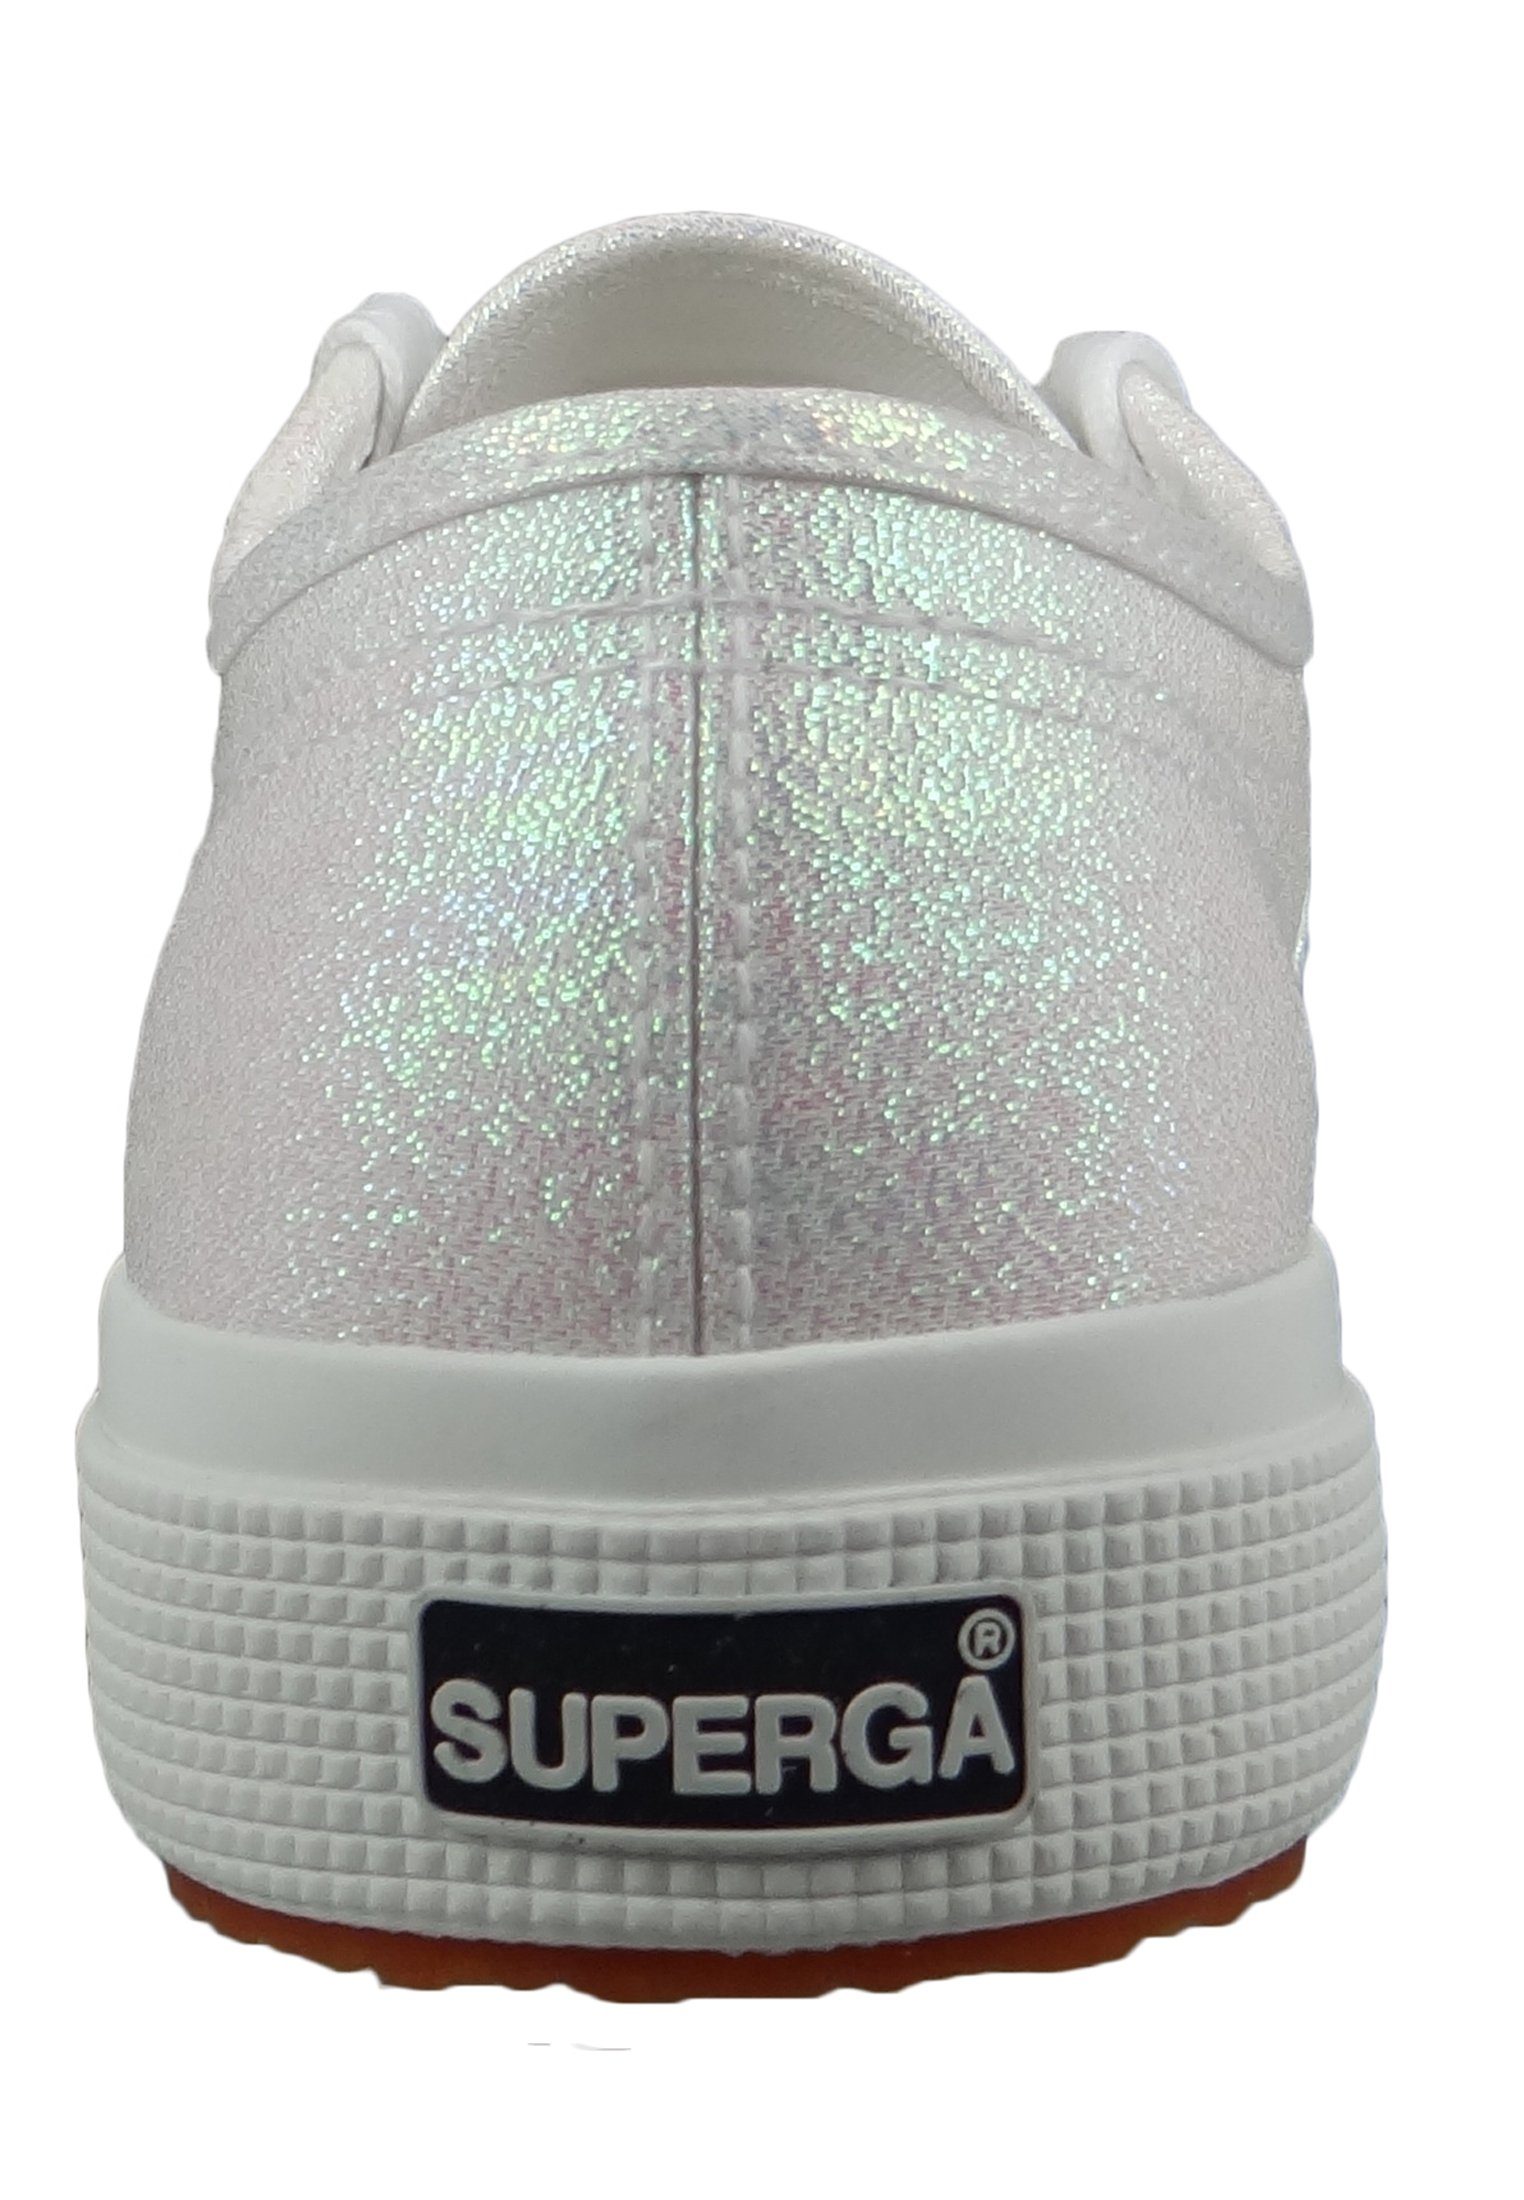 Superga S001820 AOM Iridescent (19801279) Sneaker Silber